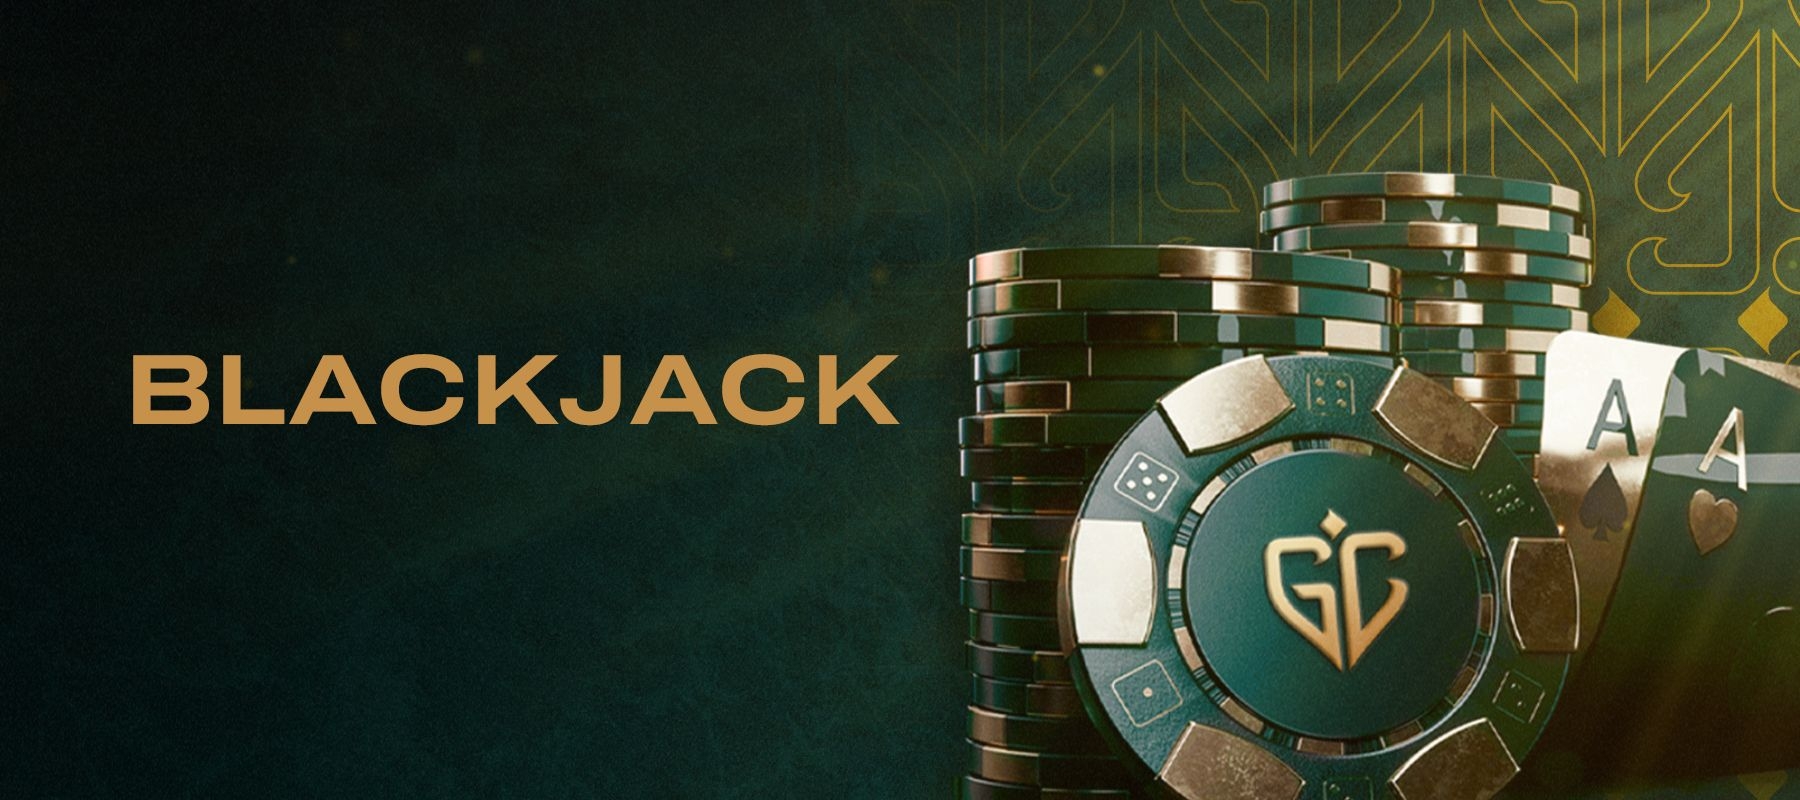 J Co Blackjack Topslotsite Com Gaming